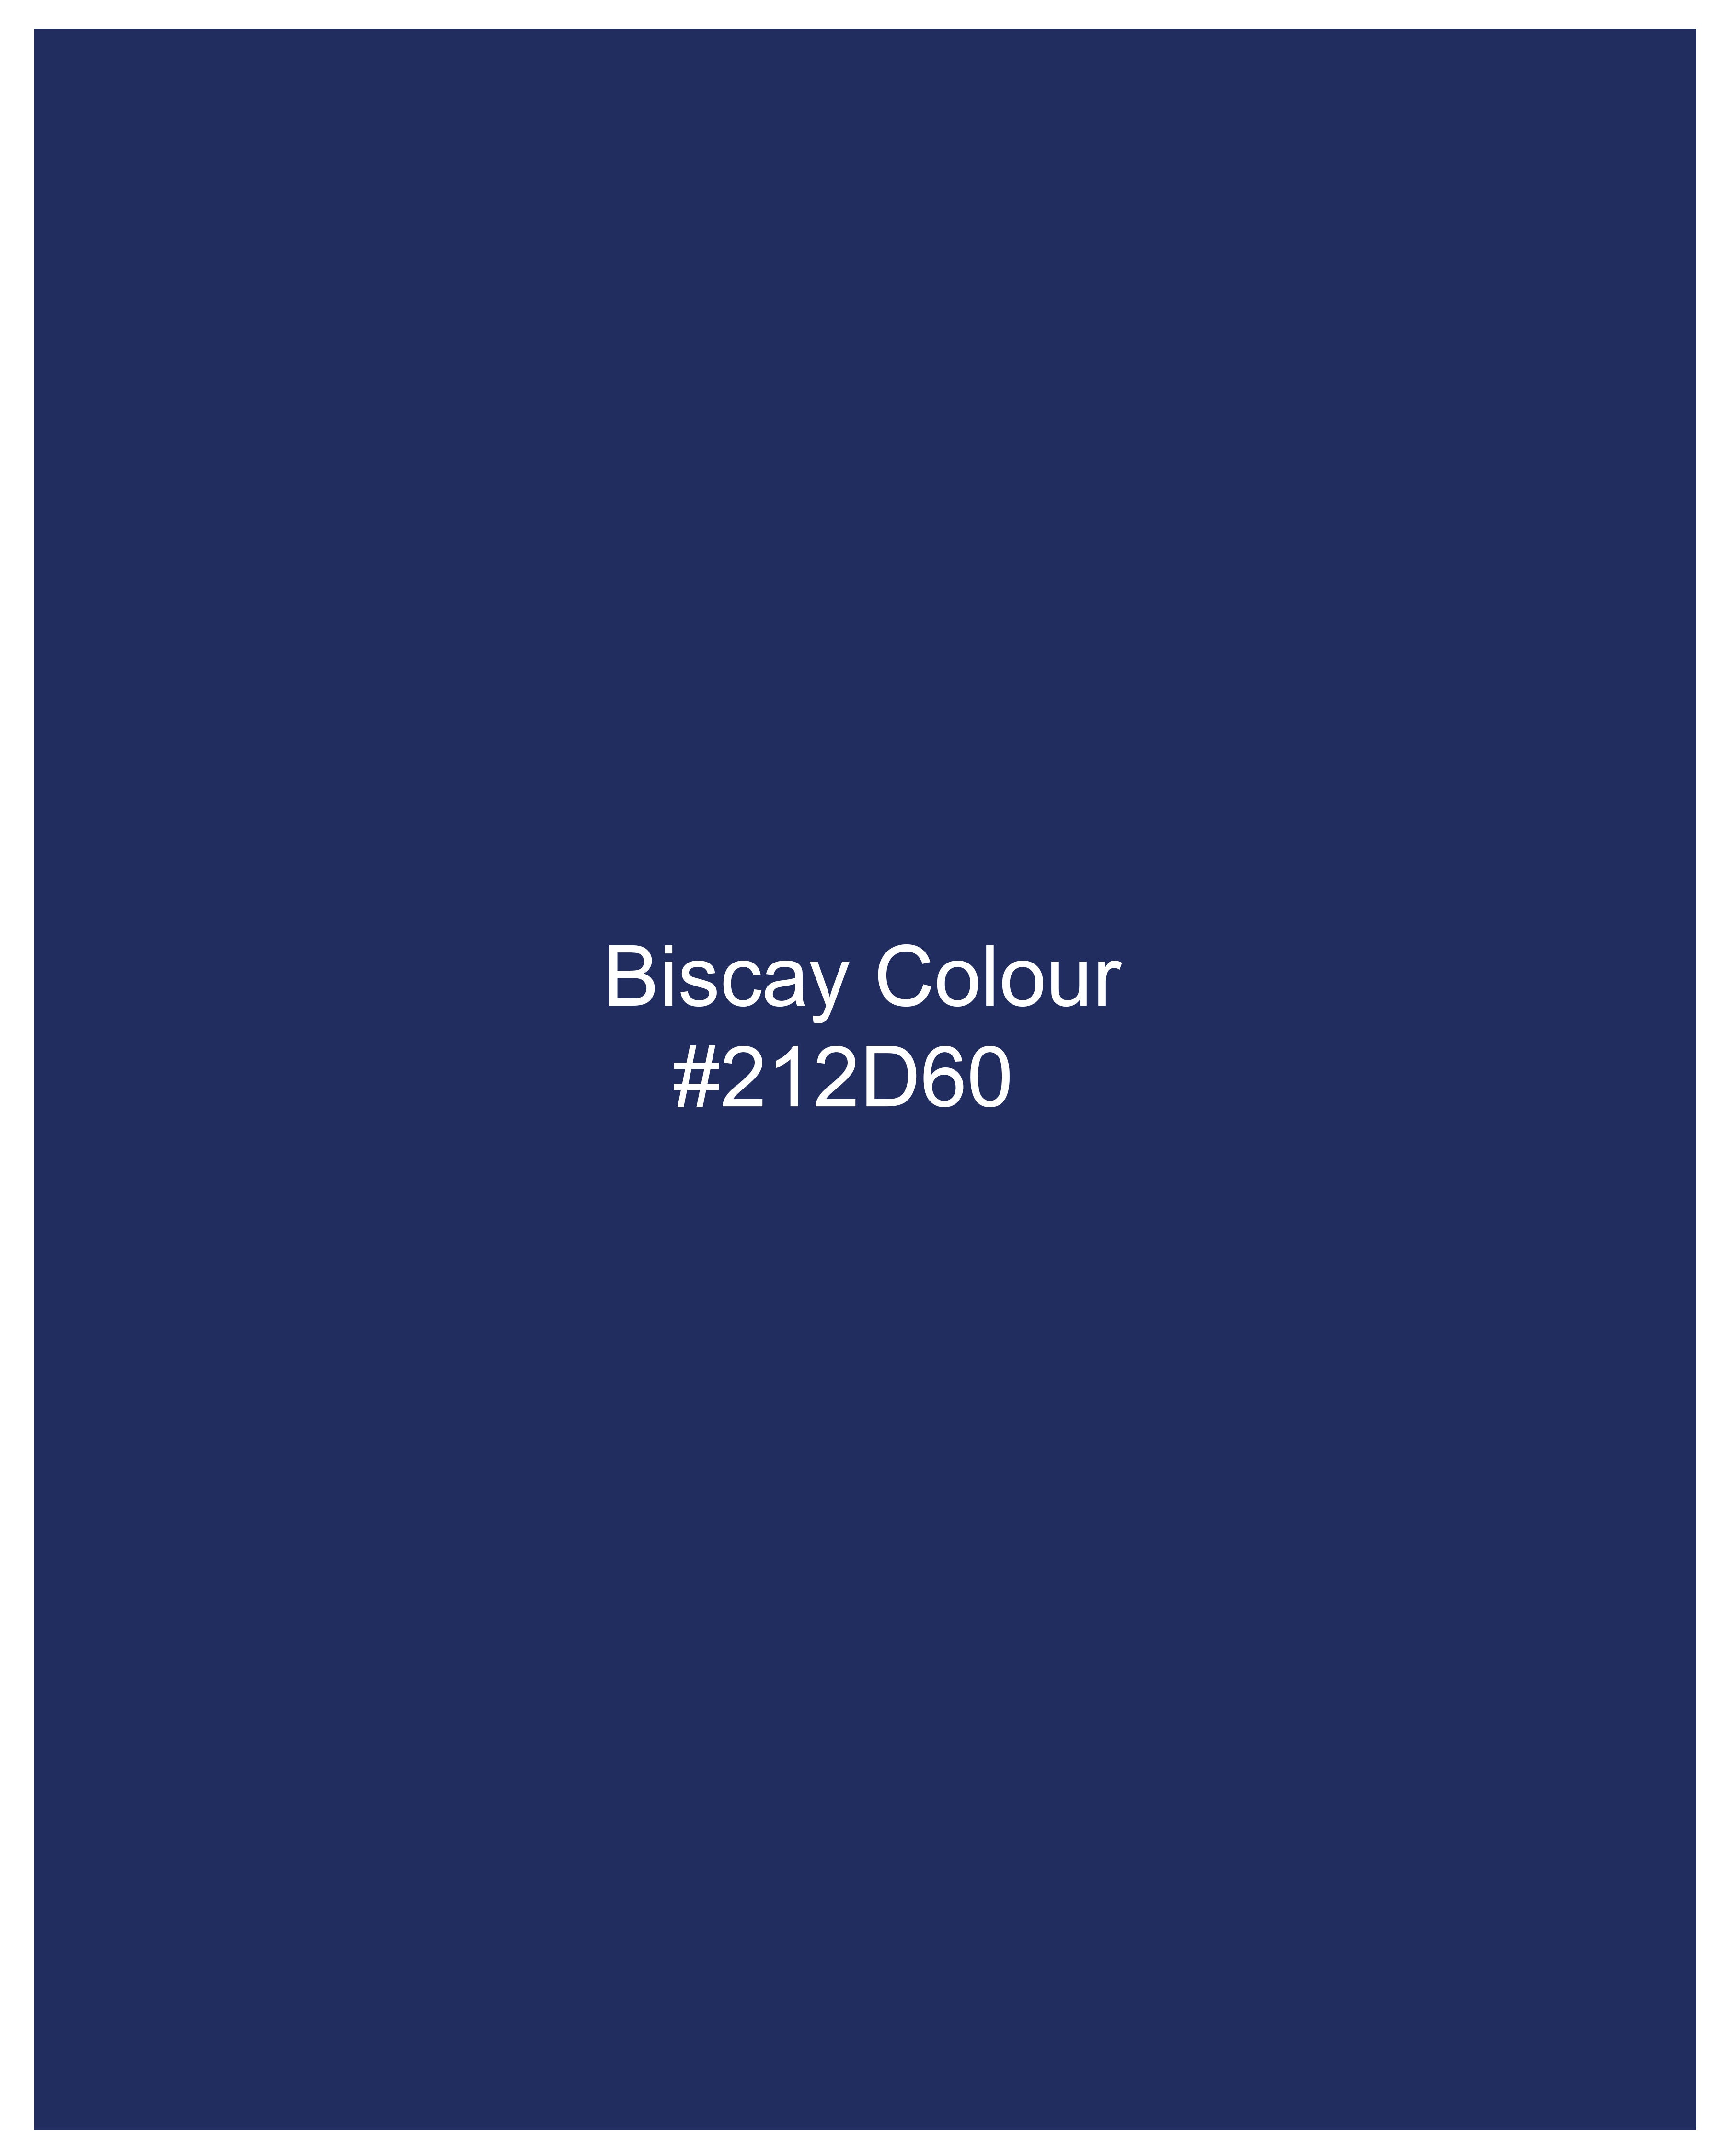 Biscay Blue Chambray Shirt 9632-BLE-38,9632-BLE-H-38,9632-BLE-39,9632-BLE-H-39,9632-BLE-40,9632-BLE-H-40,9632-BLE-42,9632-BLE-H-42,9632-BLE-44,9632-BLE-H-44,9632-BLE-46,9632-BLE-H-46,9632-BLE-48,9632-BLE-H-48,9632-BLE-50,9632-BLE-H-50,9632-BLE-52,9632-BLE-H-52